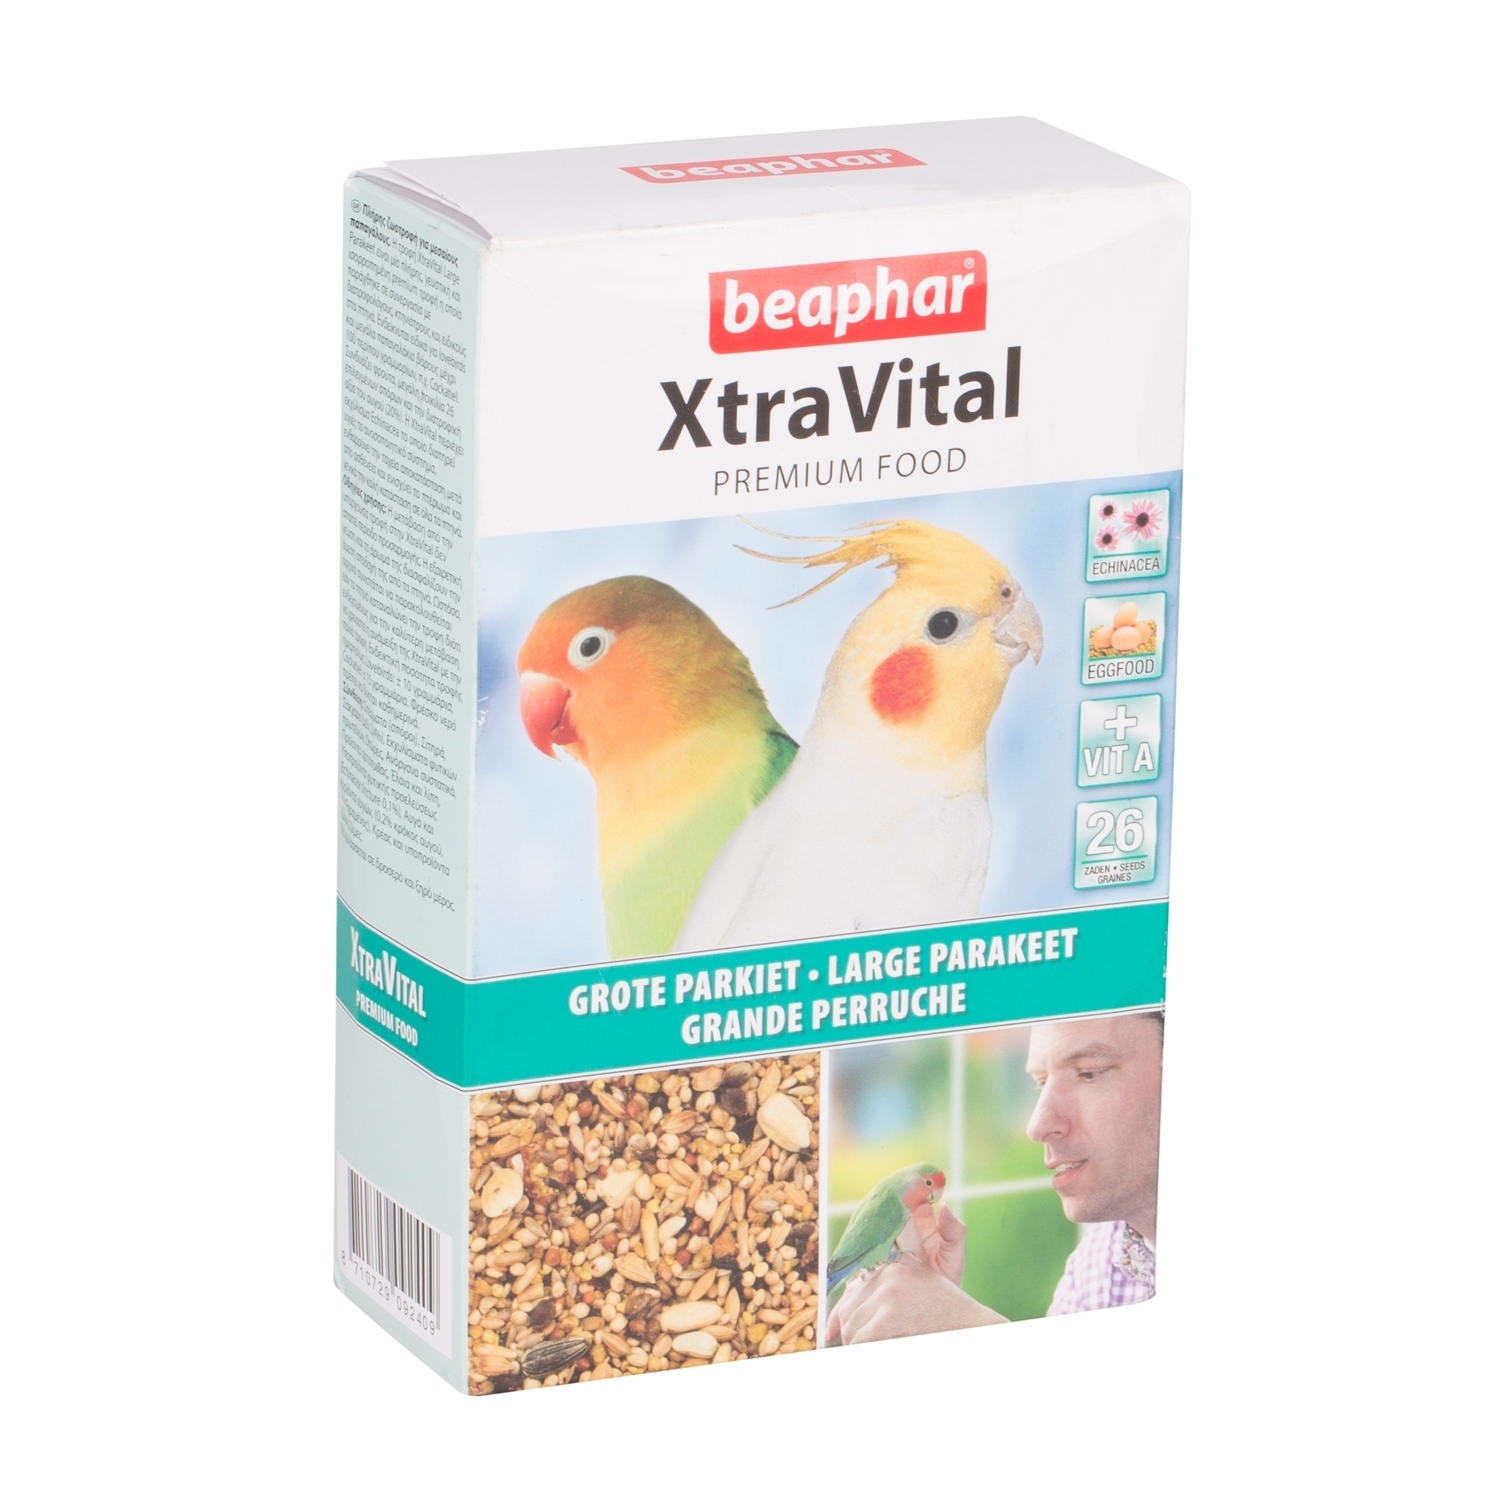 Beaphar XtraVital Premium Food for Large Parakeets Image